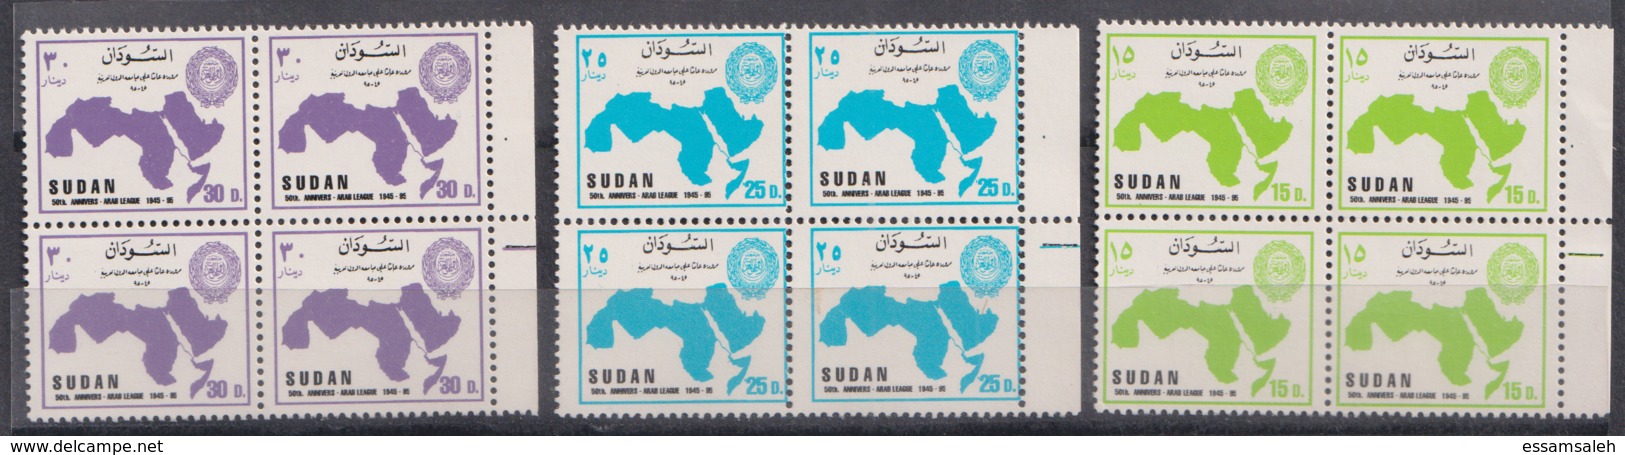 SDS05027 Sudan 1995 ARAB LEAGUE 50TH ANNIVERSARY - Complete Set / Blocks Of 4 Stamps - MNH - Sudan (1954-...)